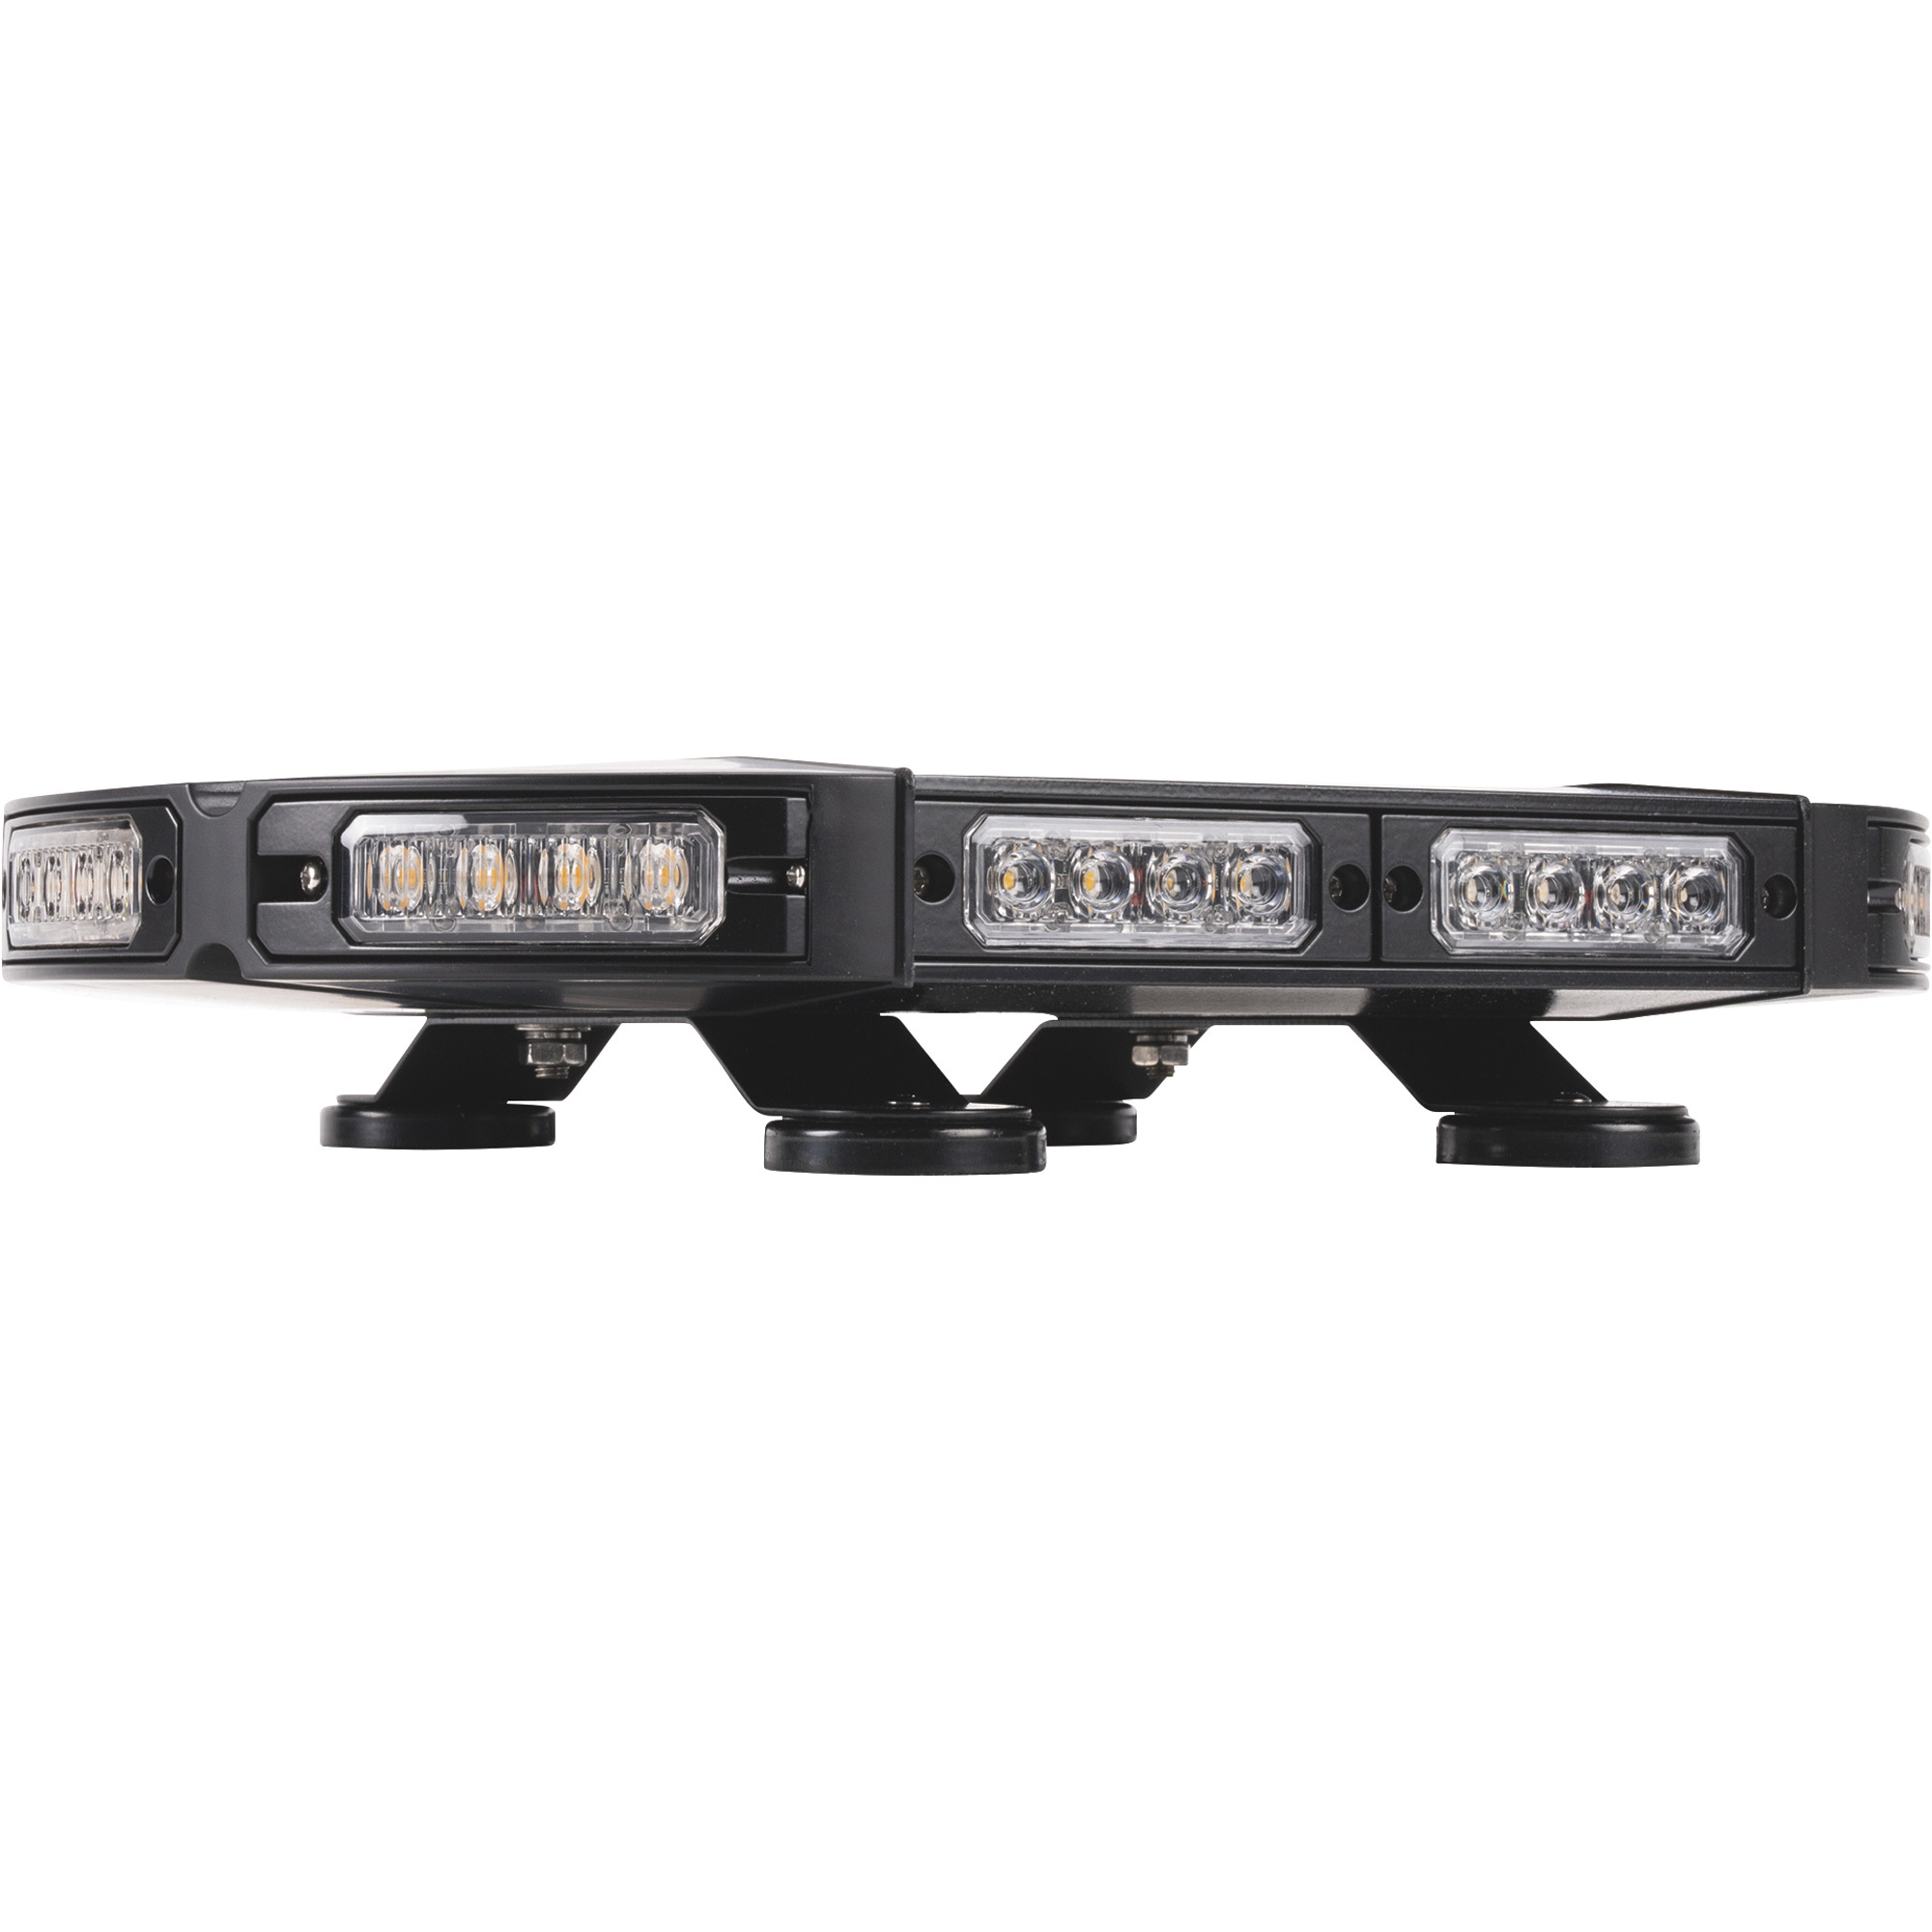 Blazer 12V LED Class 1 Emergency Light Bar â 40 Watt, Clear Lens/Amber LEDs, 11 Flash Patterns, Magnetic Mount, Model C4857CAC